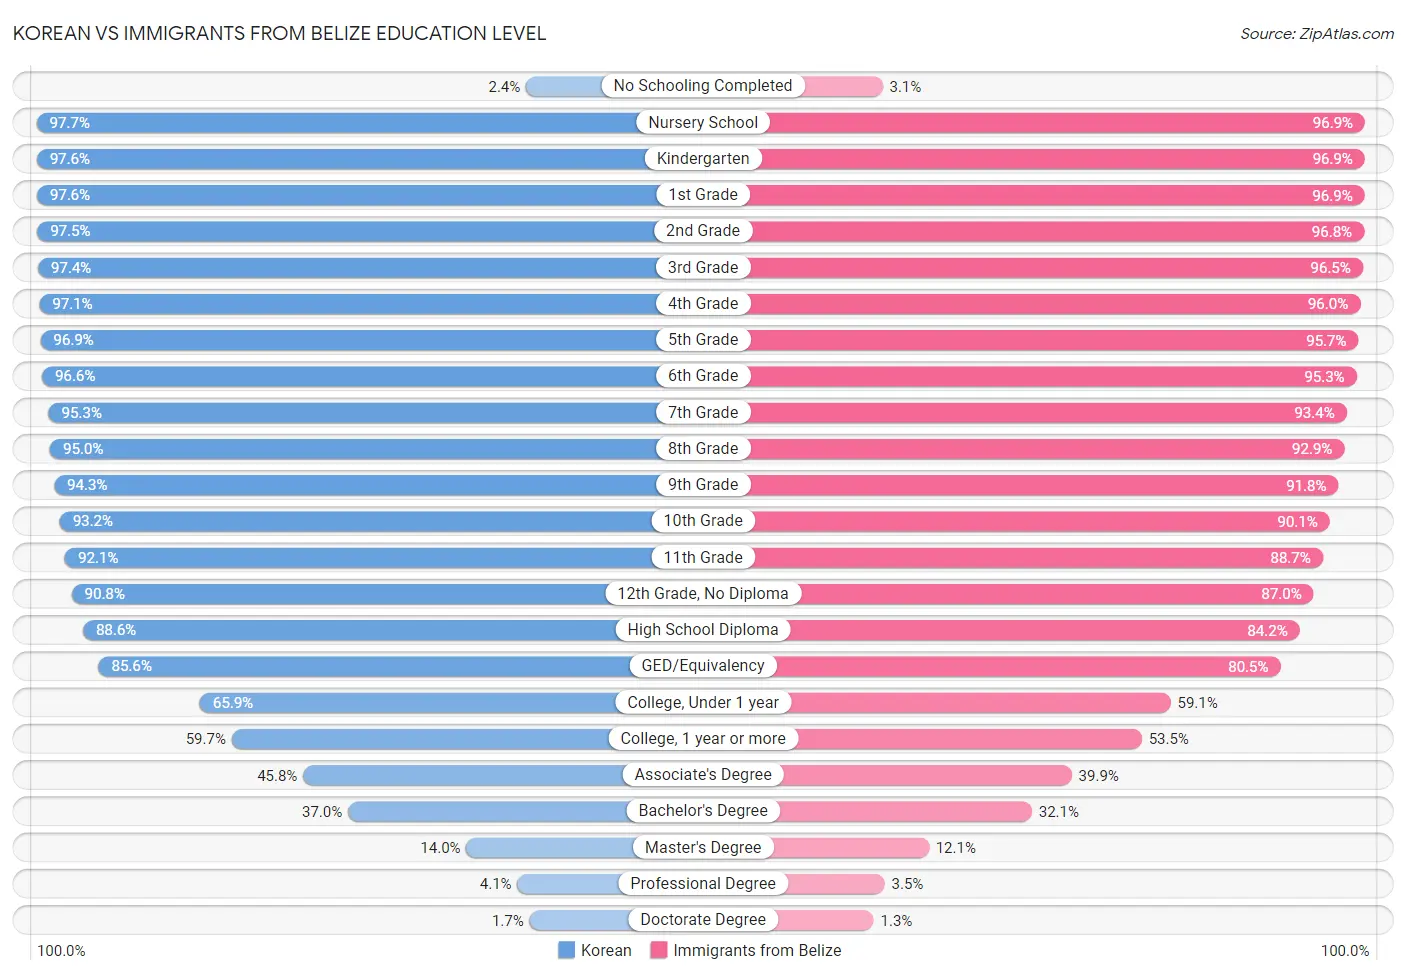 Korean vs Immigrants from Belize Education Level